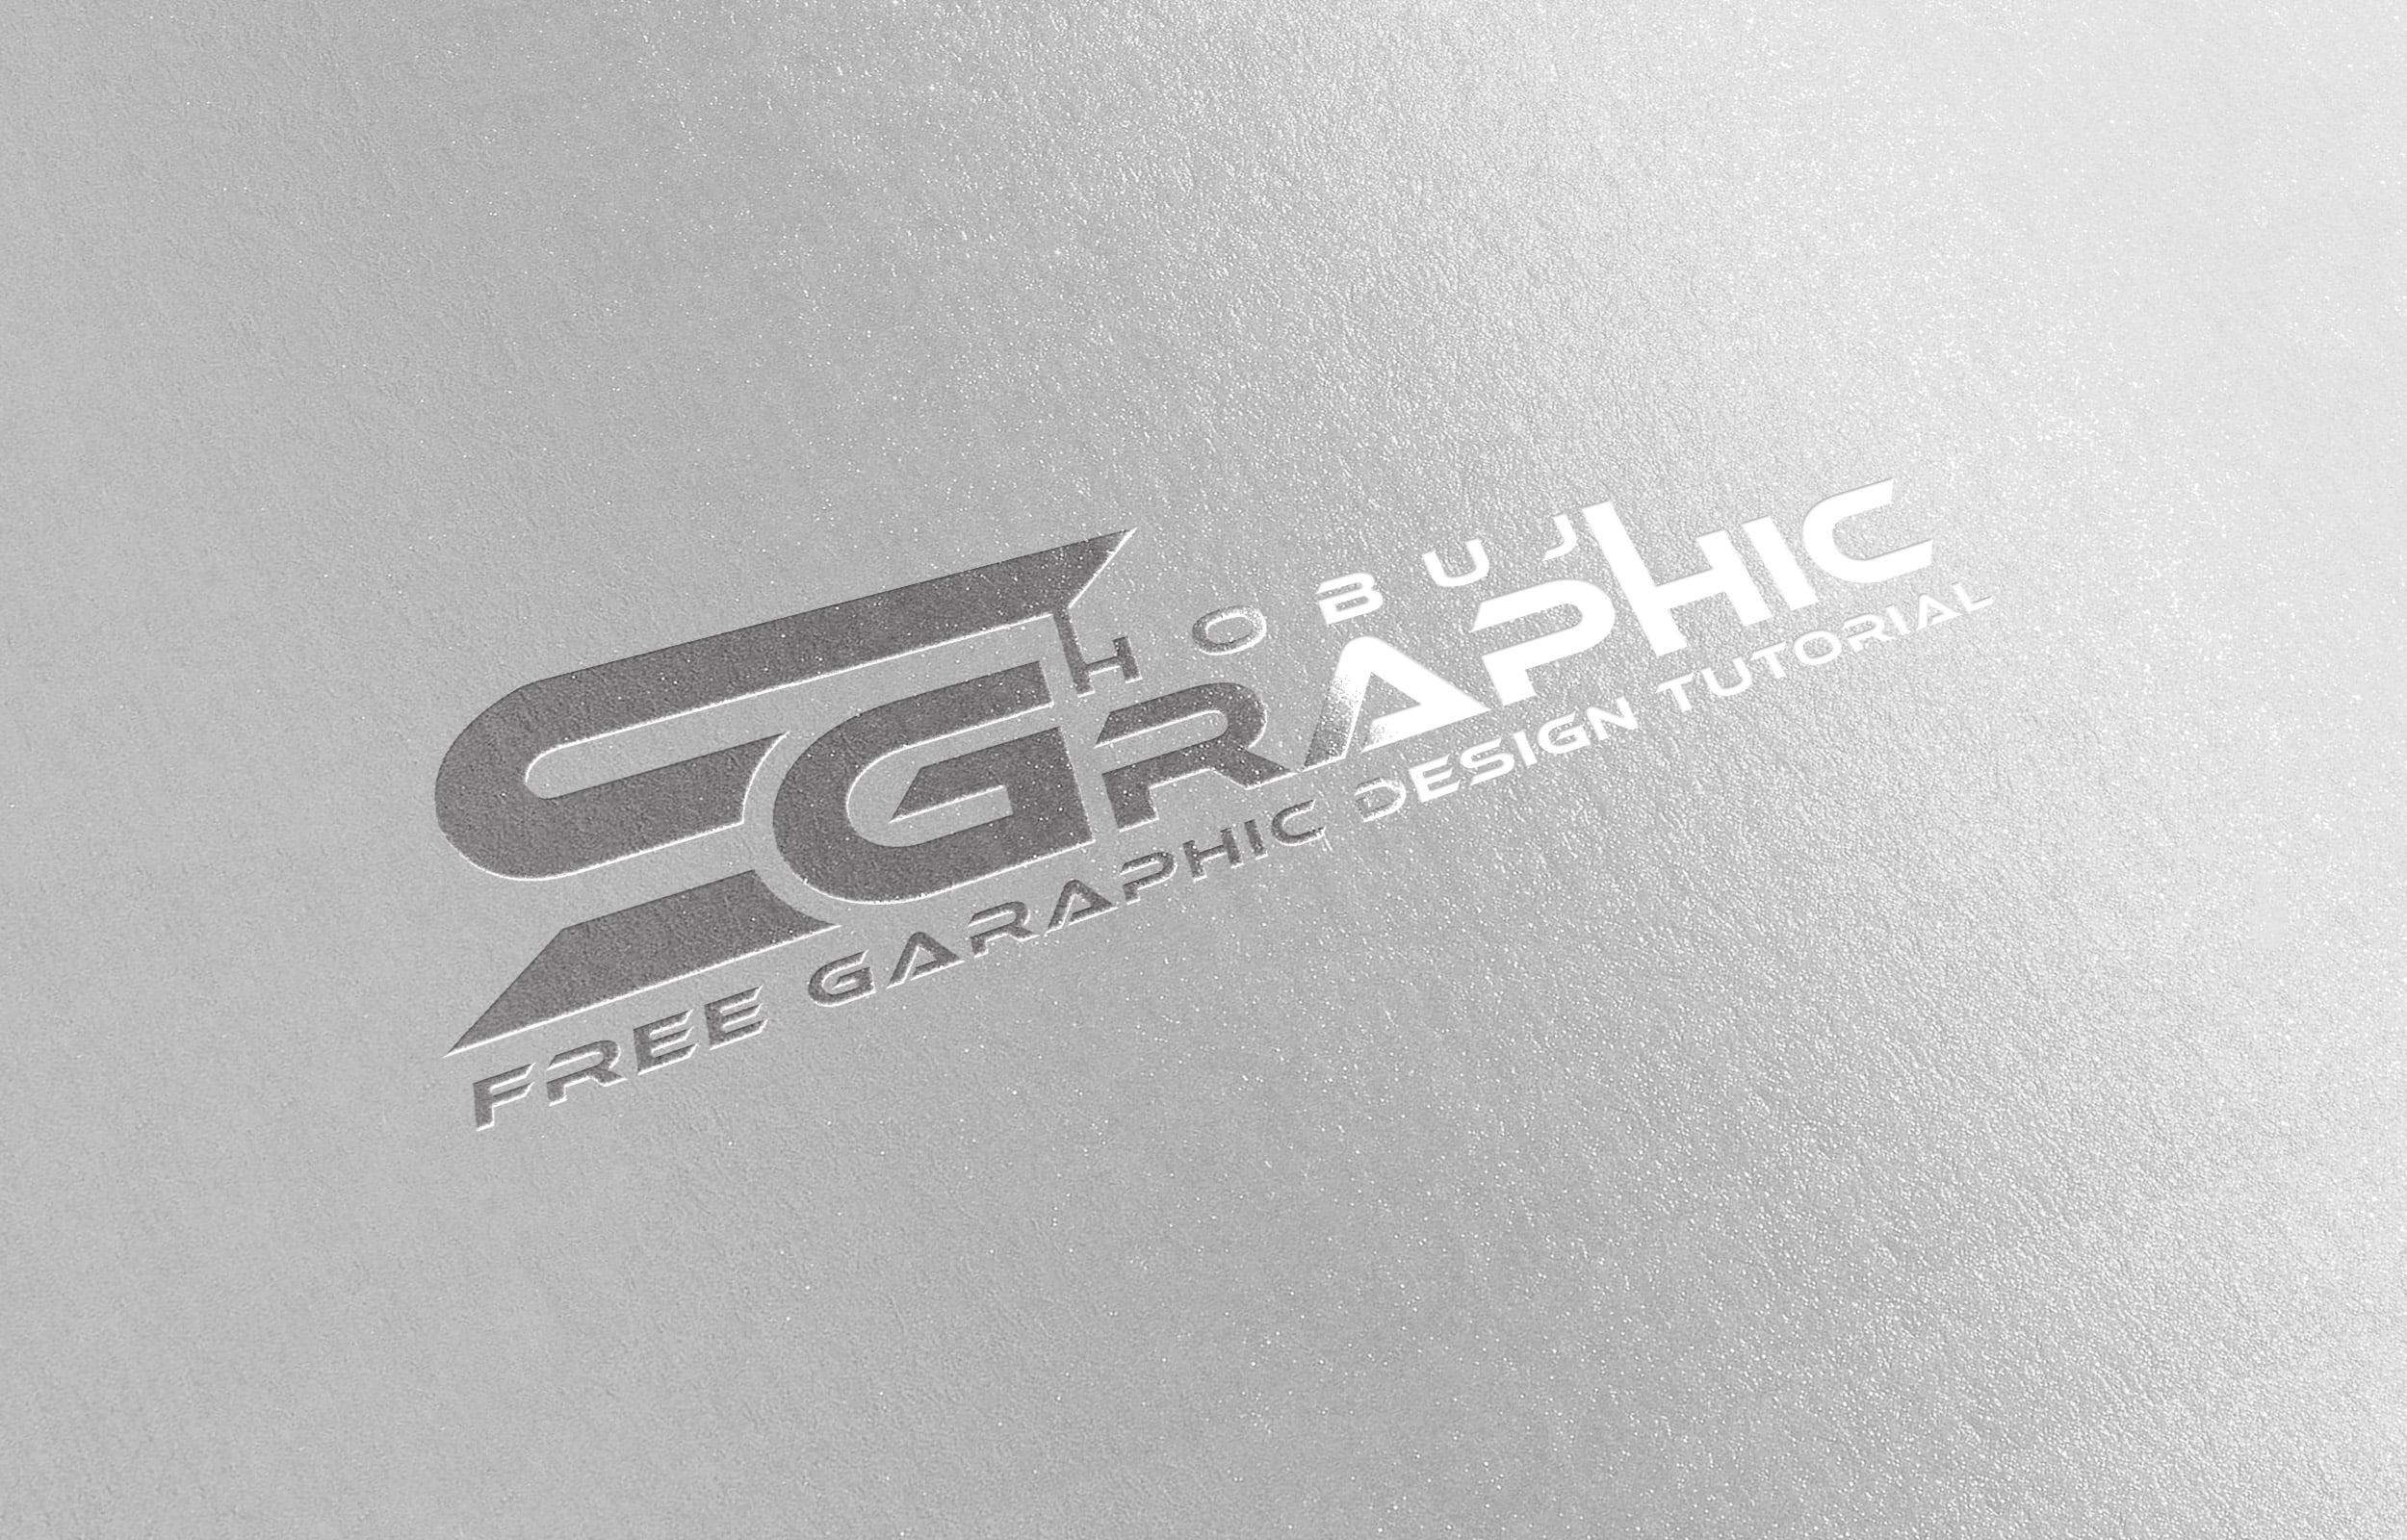 Gqf Logo Design Showcase - Free Vectors & PSDs to Download